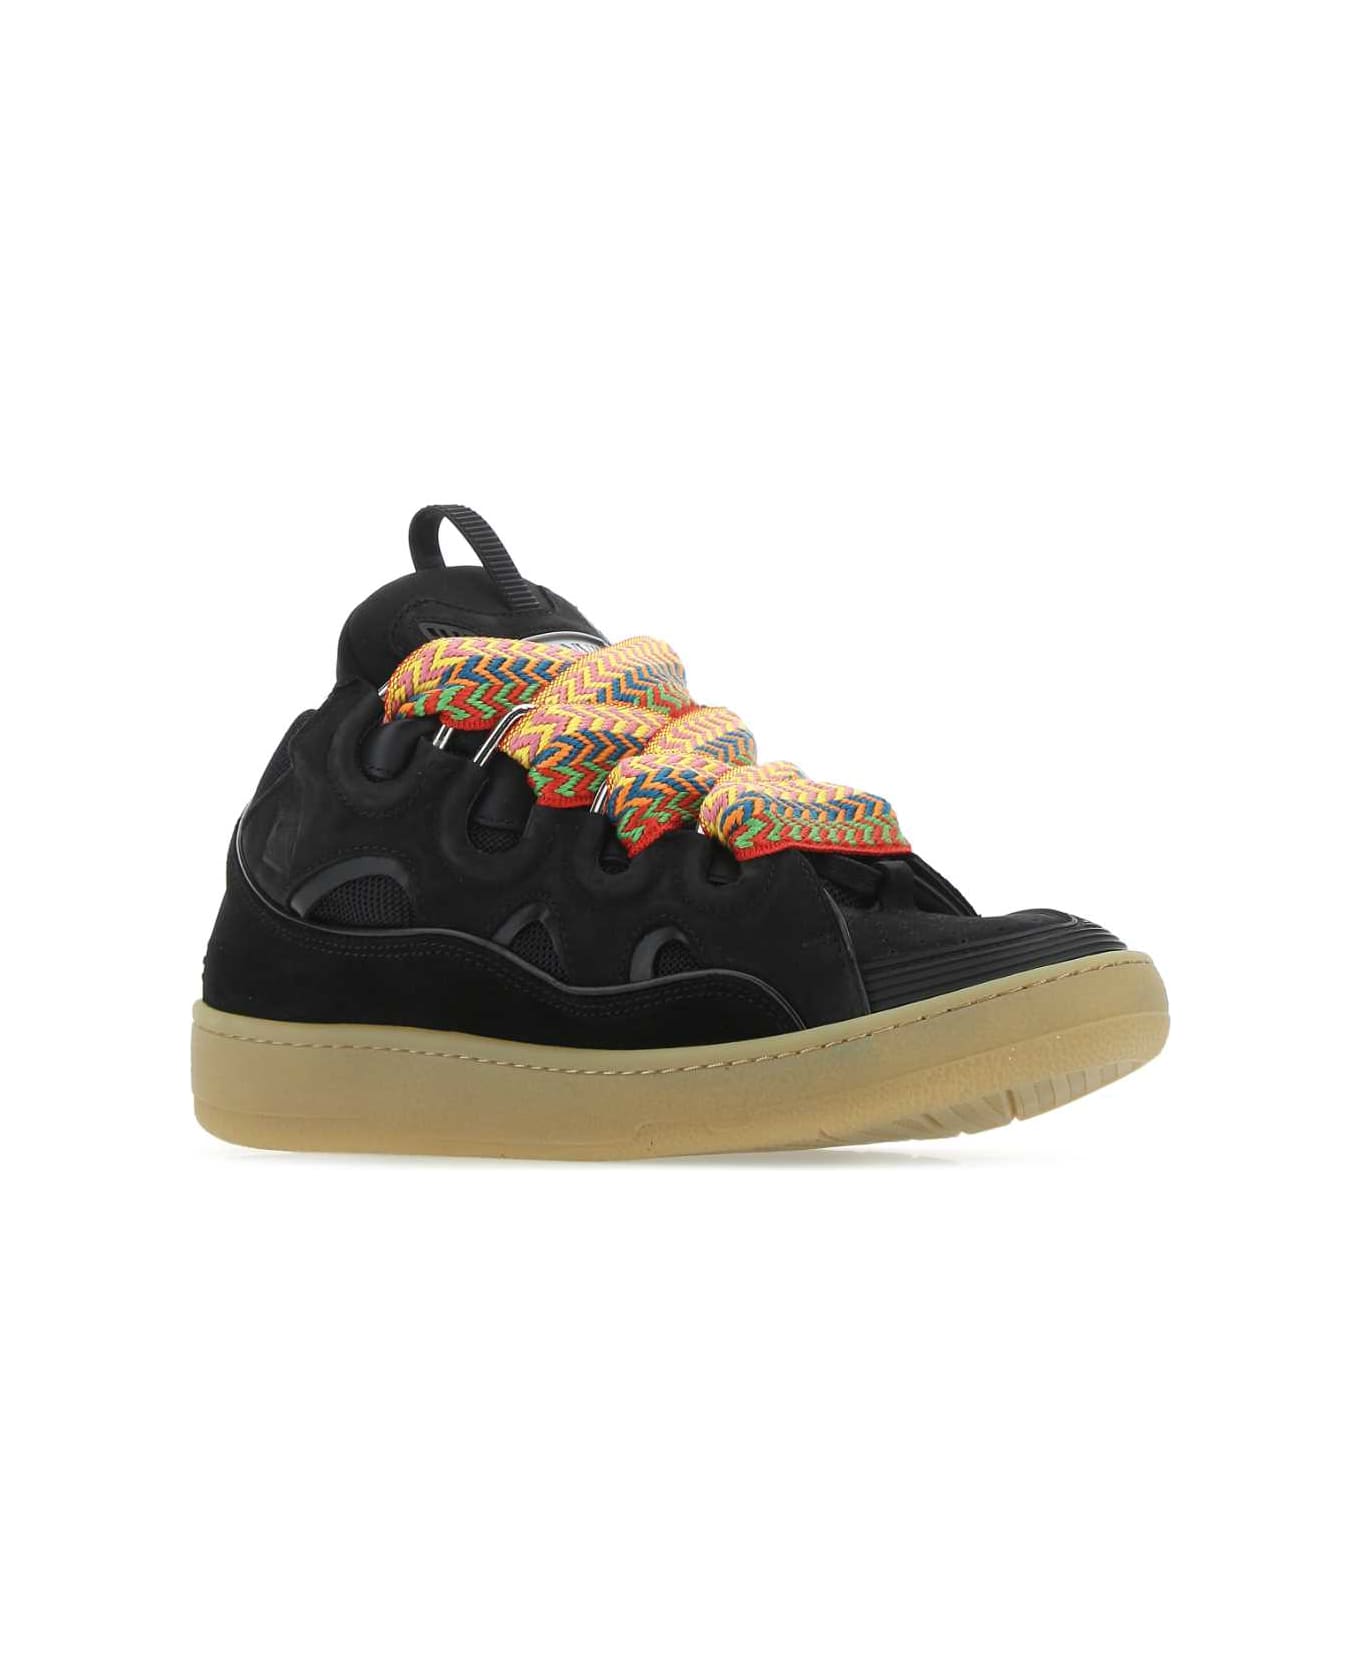 Lanvin Black Curb Sneakers - 10 スニーカー